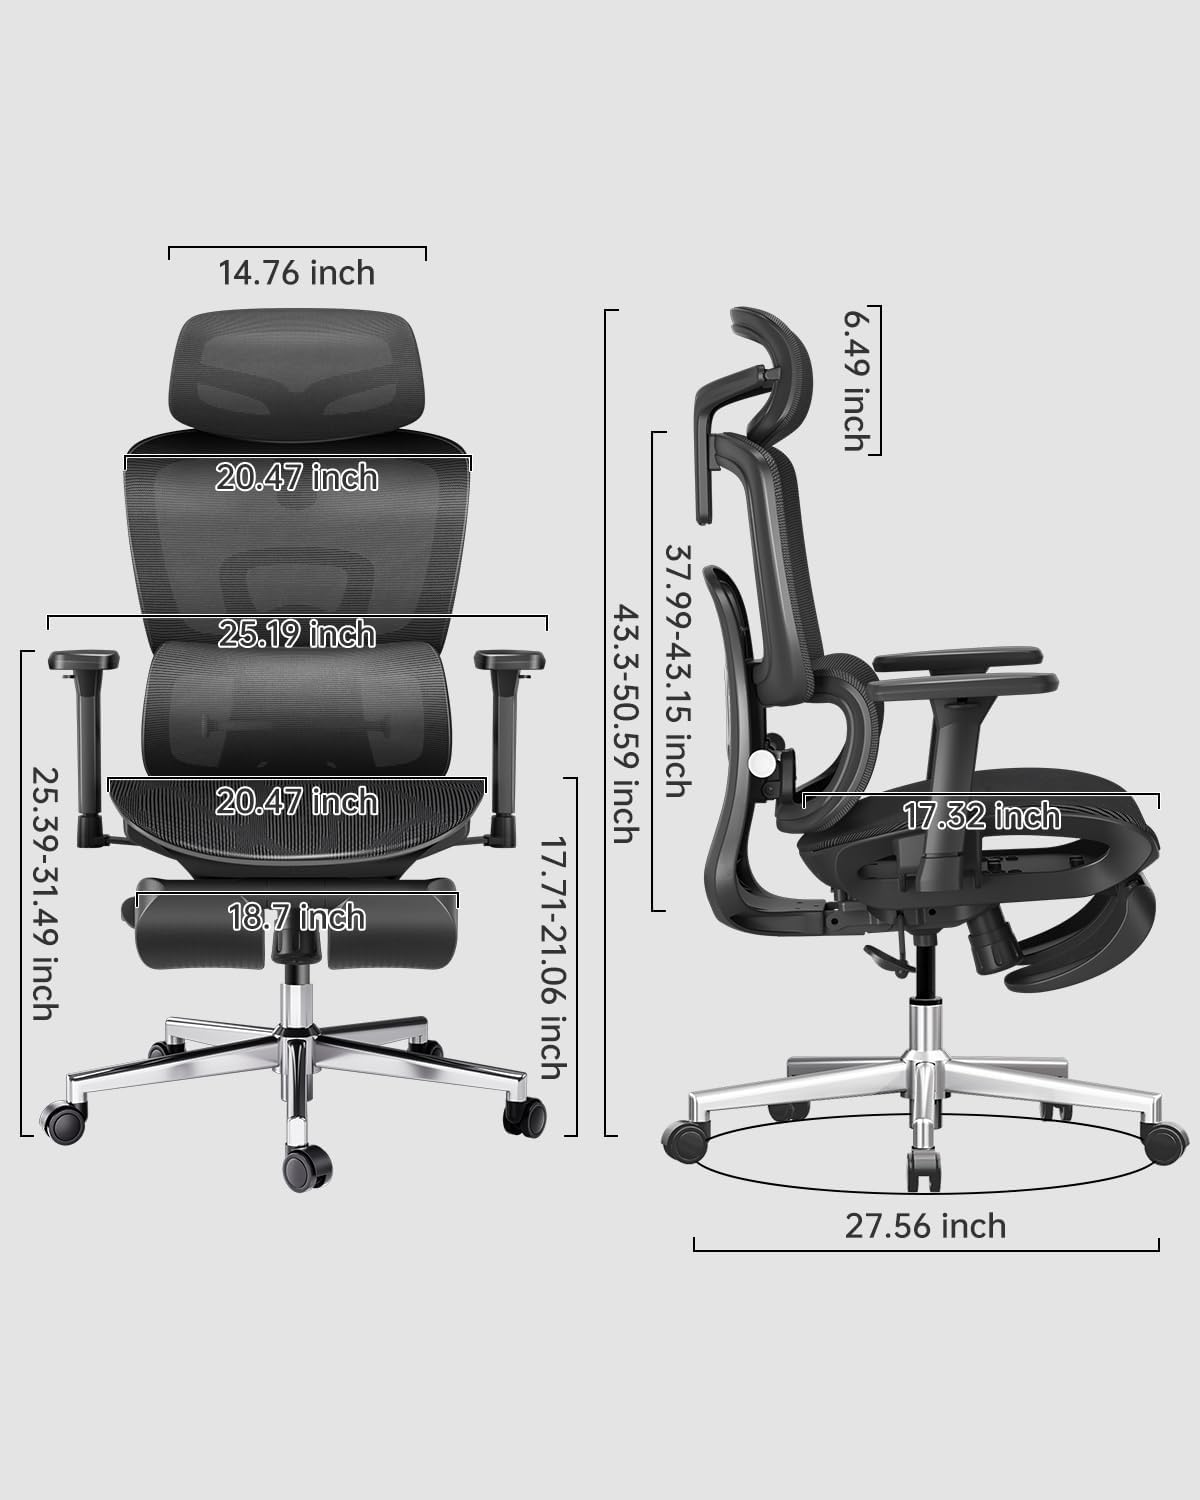 Hbada E2 Ergonomic Office Chair-Black